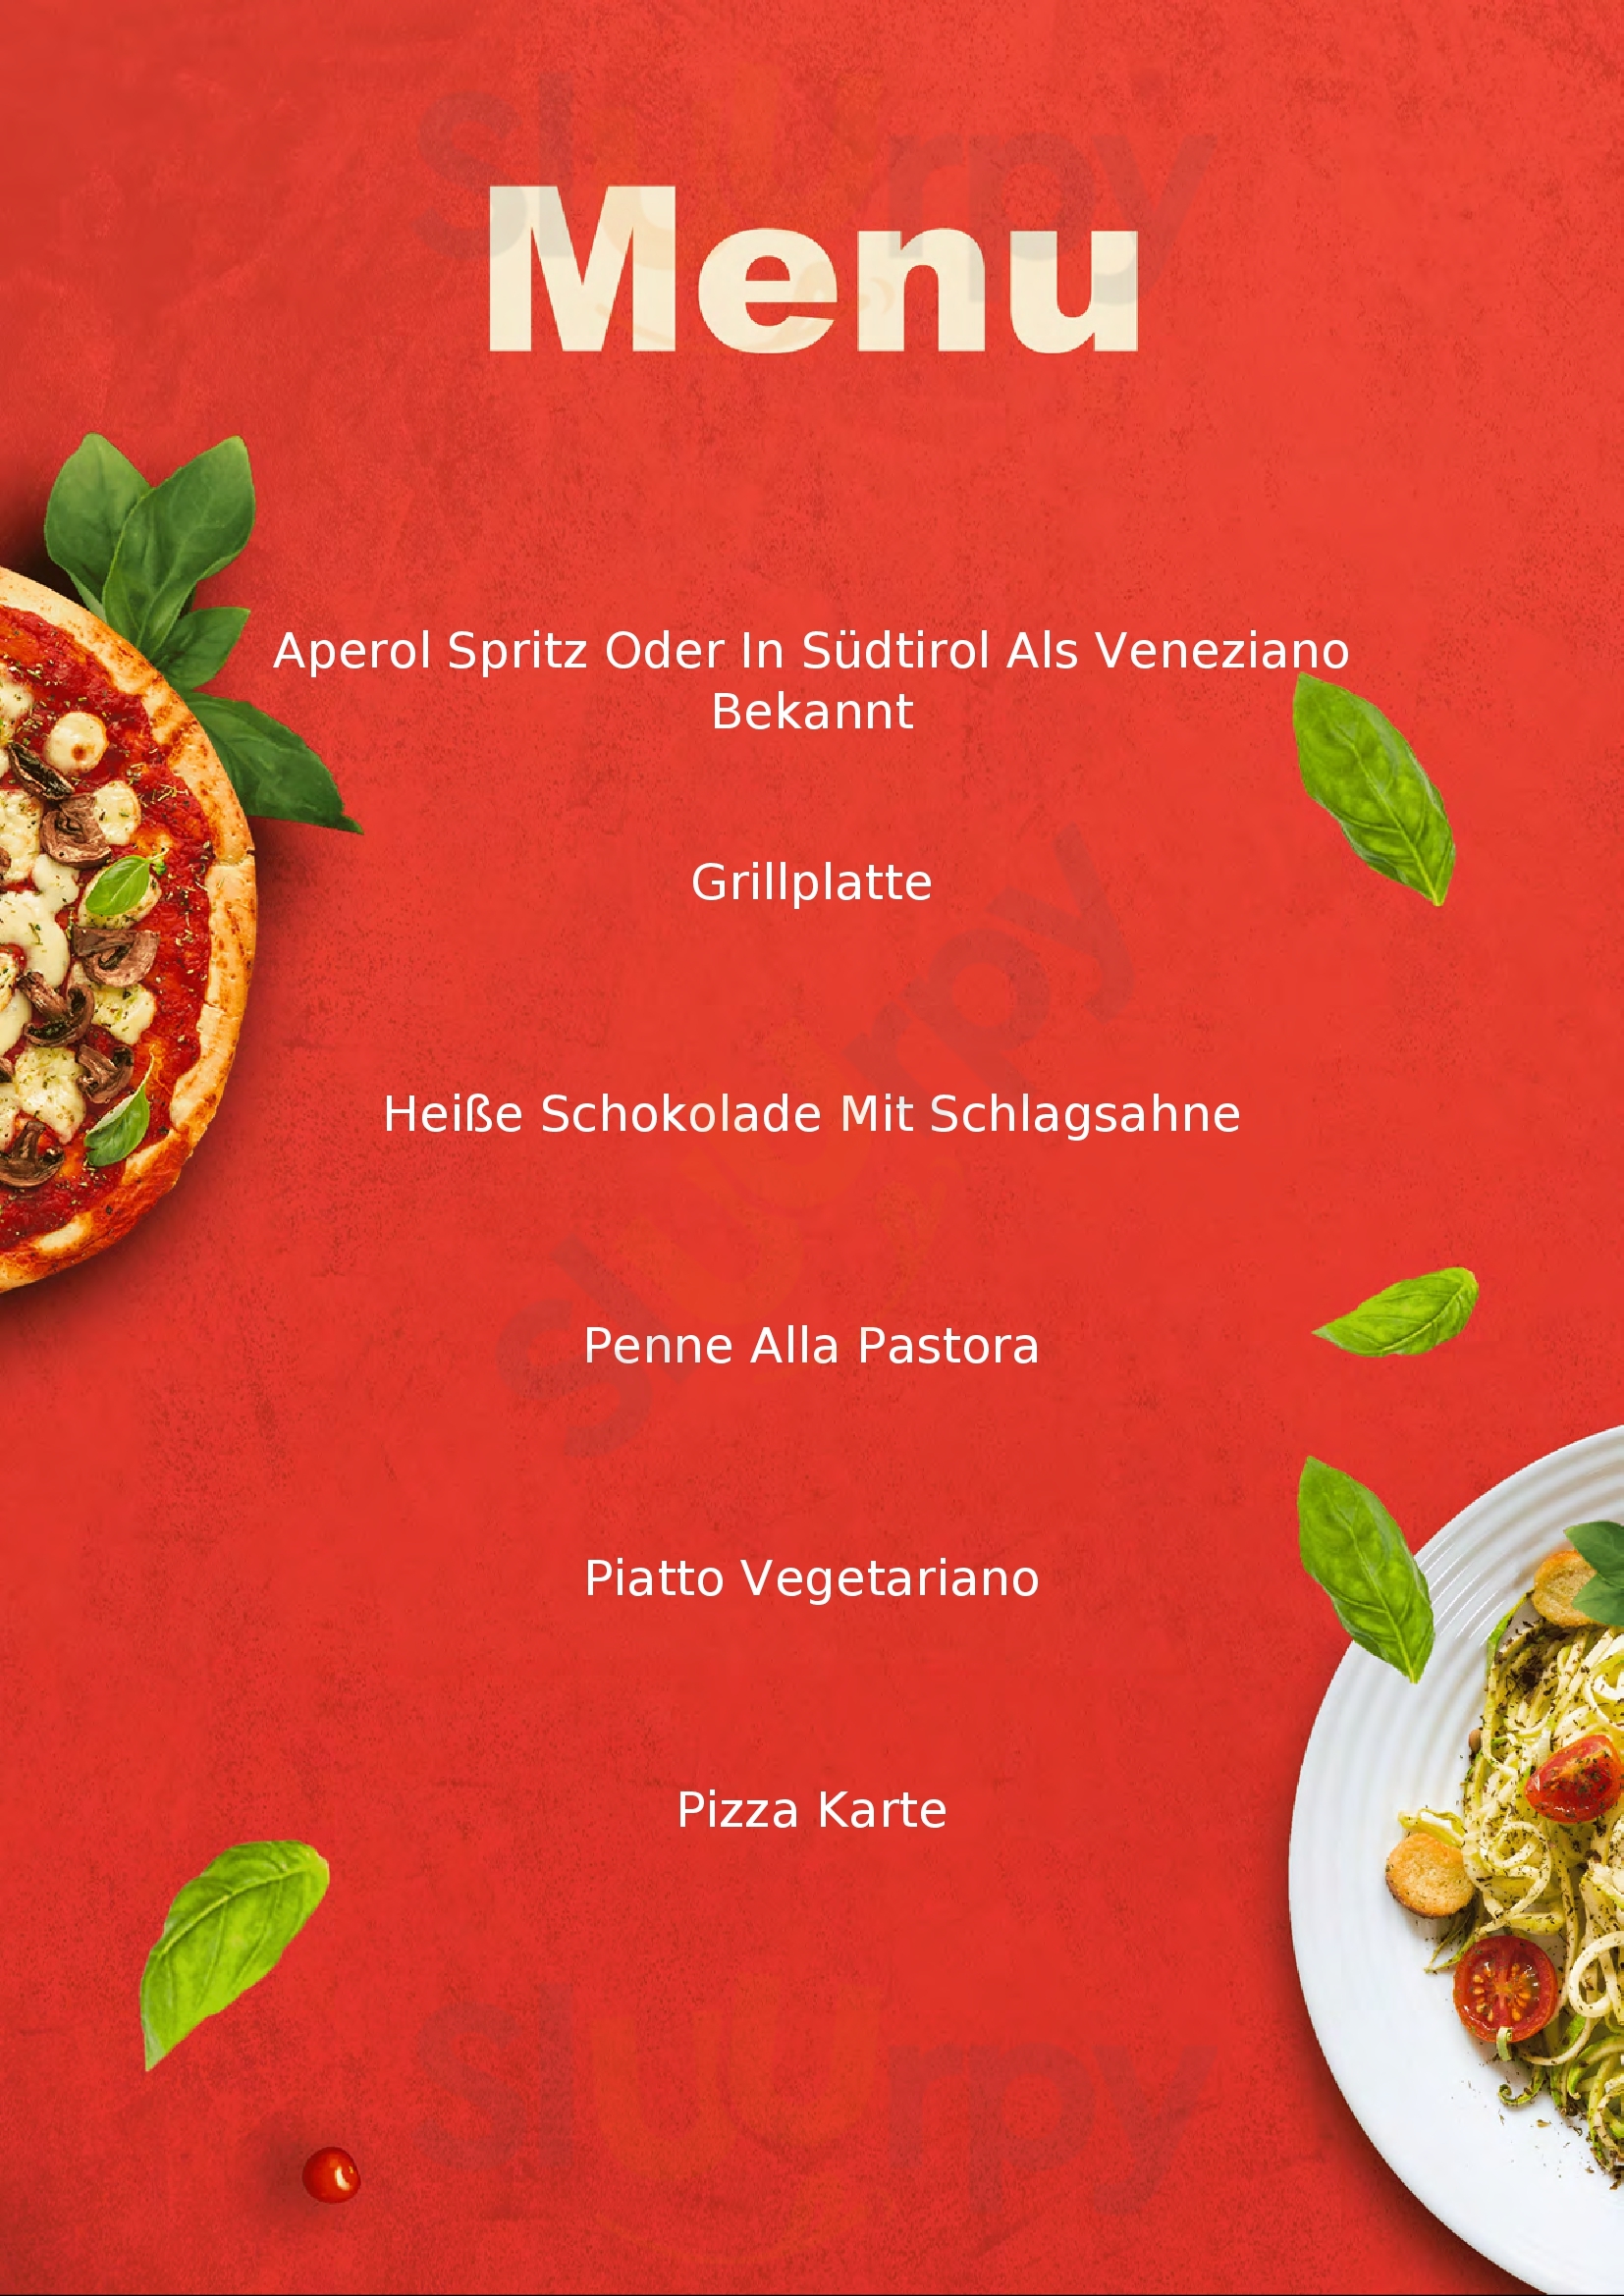 Ristorante Pizzeria Gashof Post Sarentino menù 1 pagina